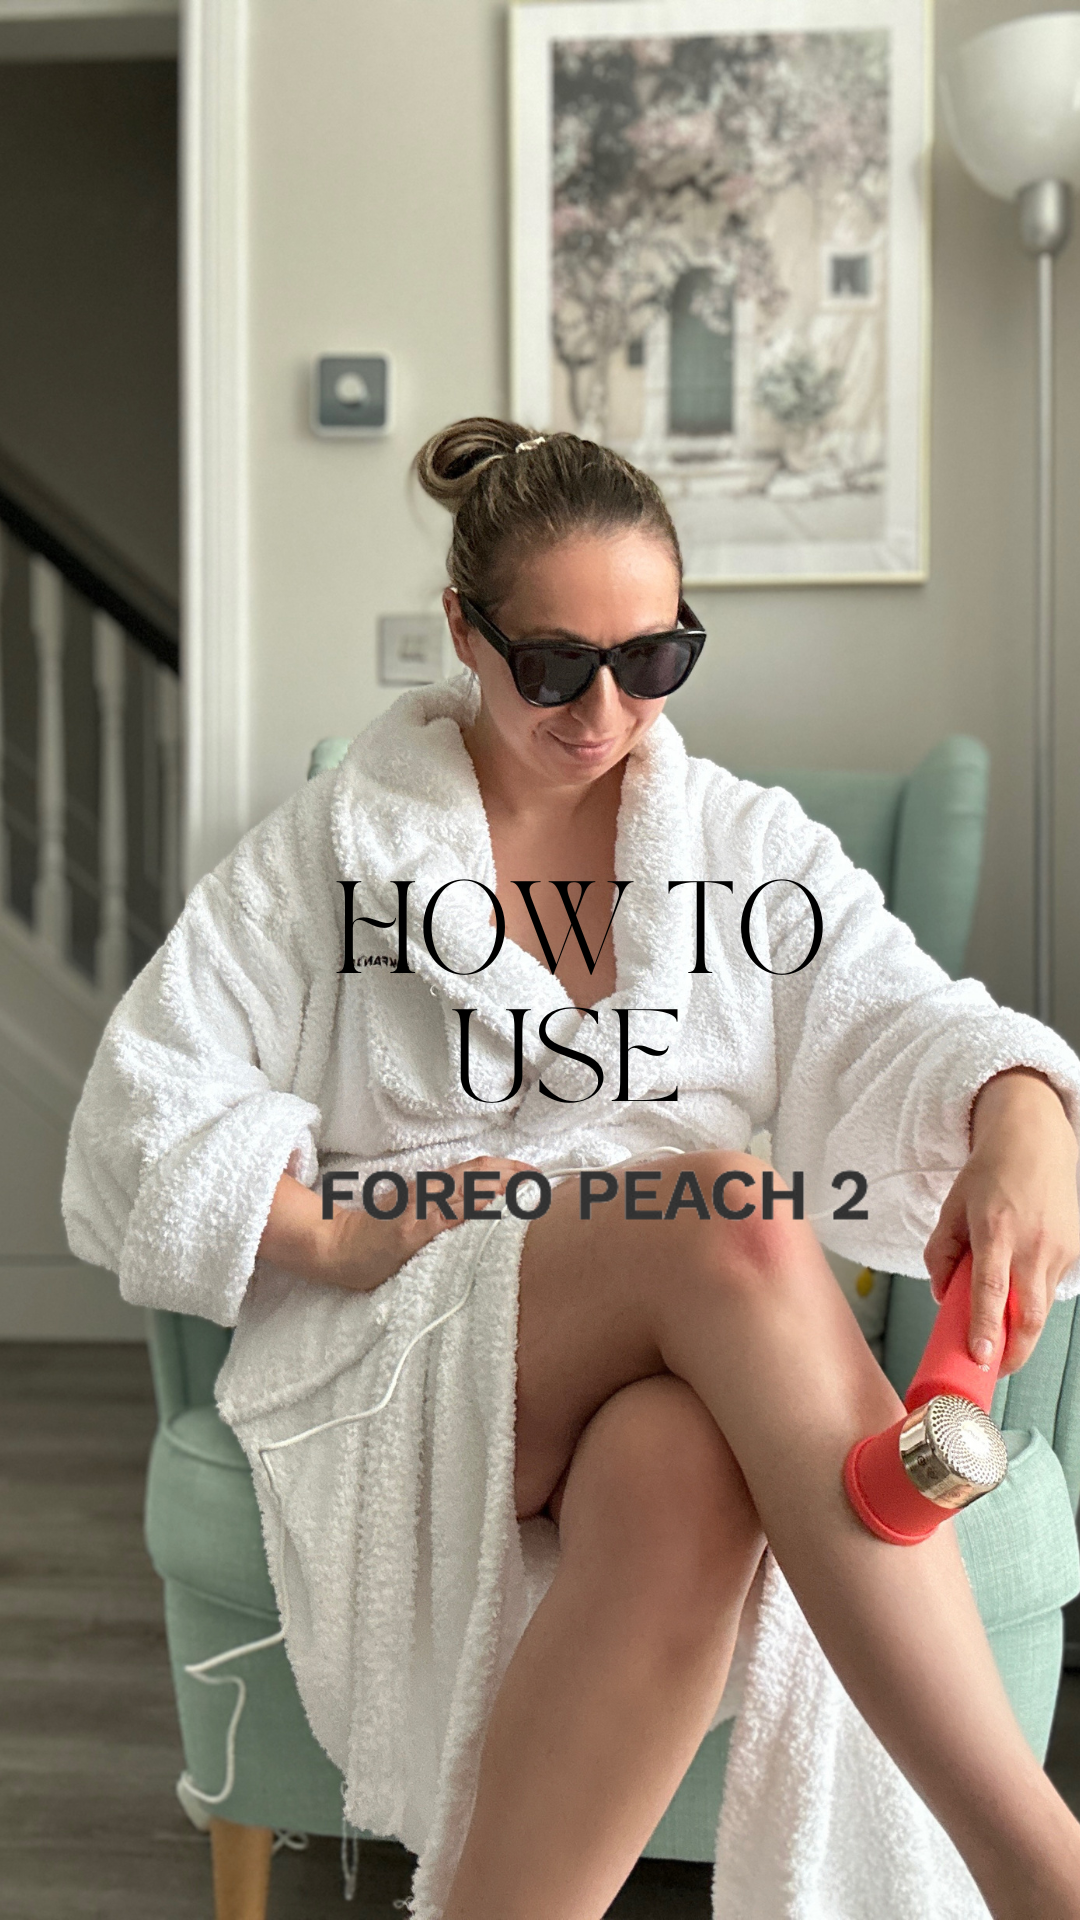 Skin Preparation - Key step before using the Foreo Peach 2